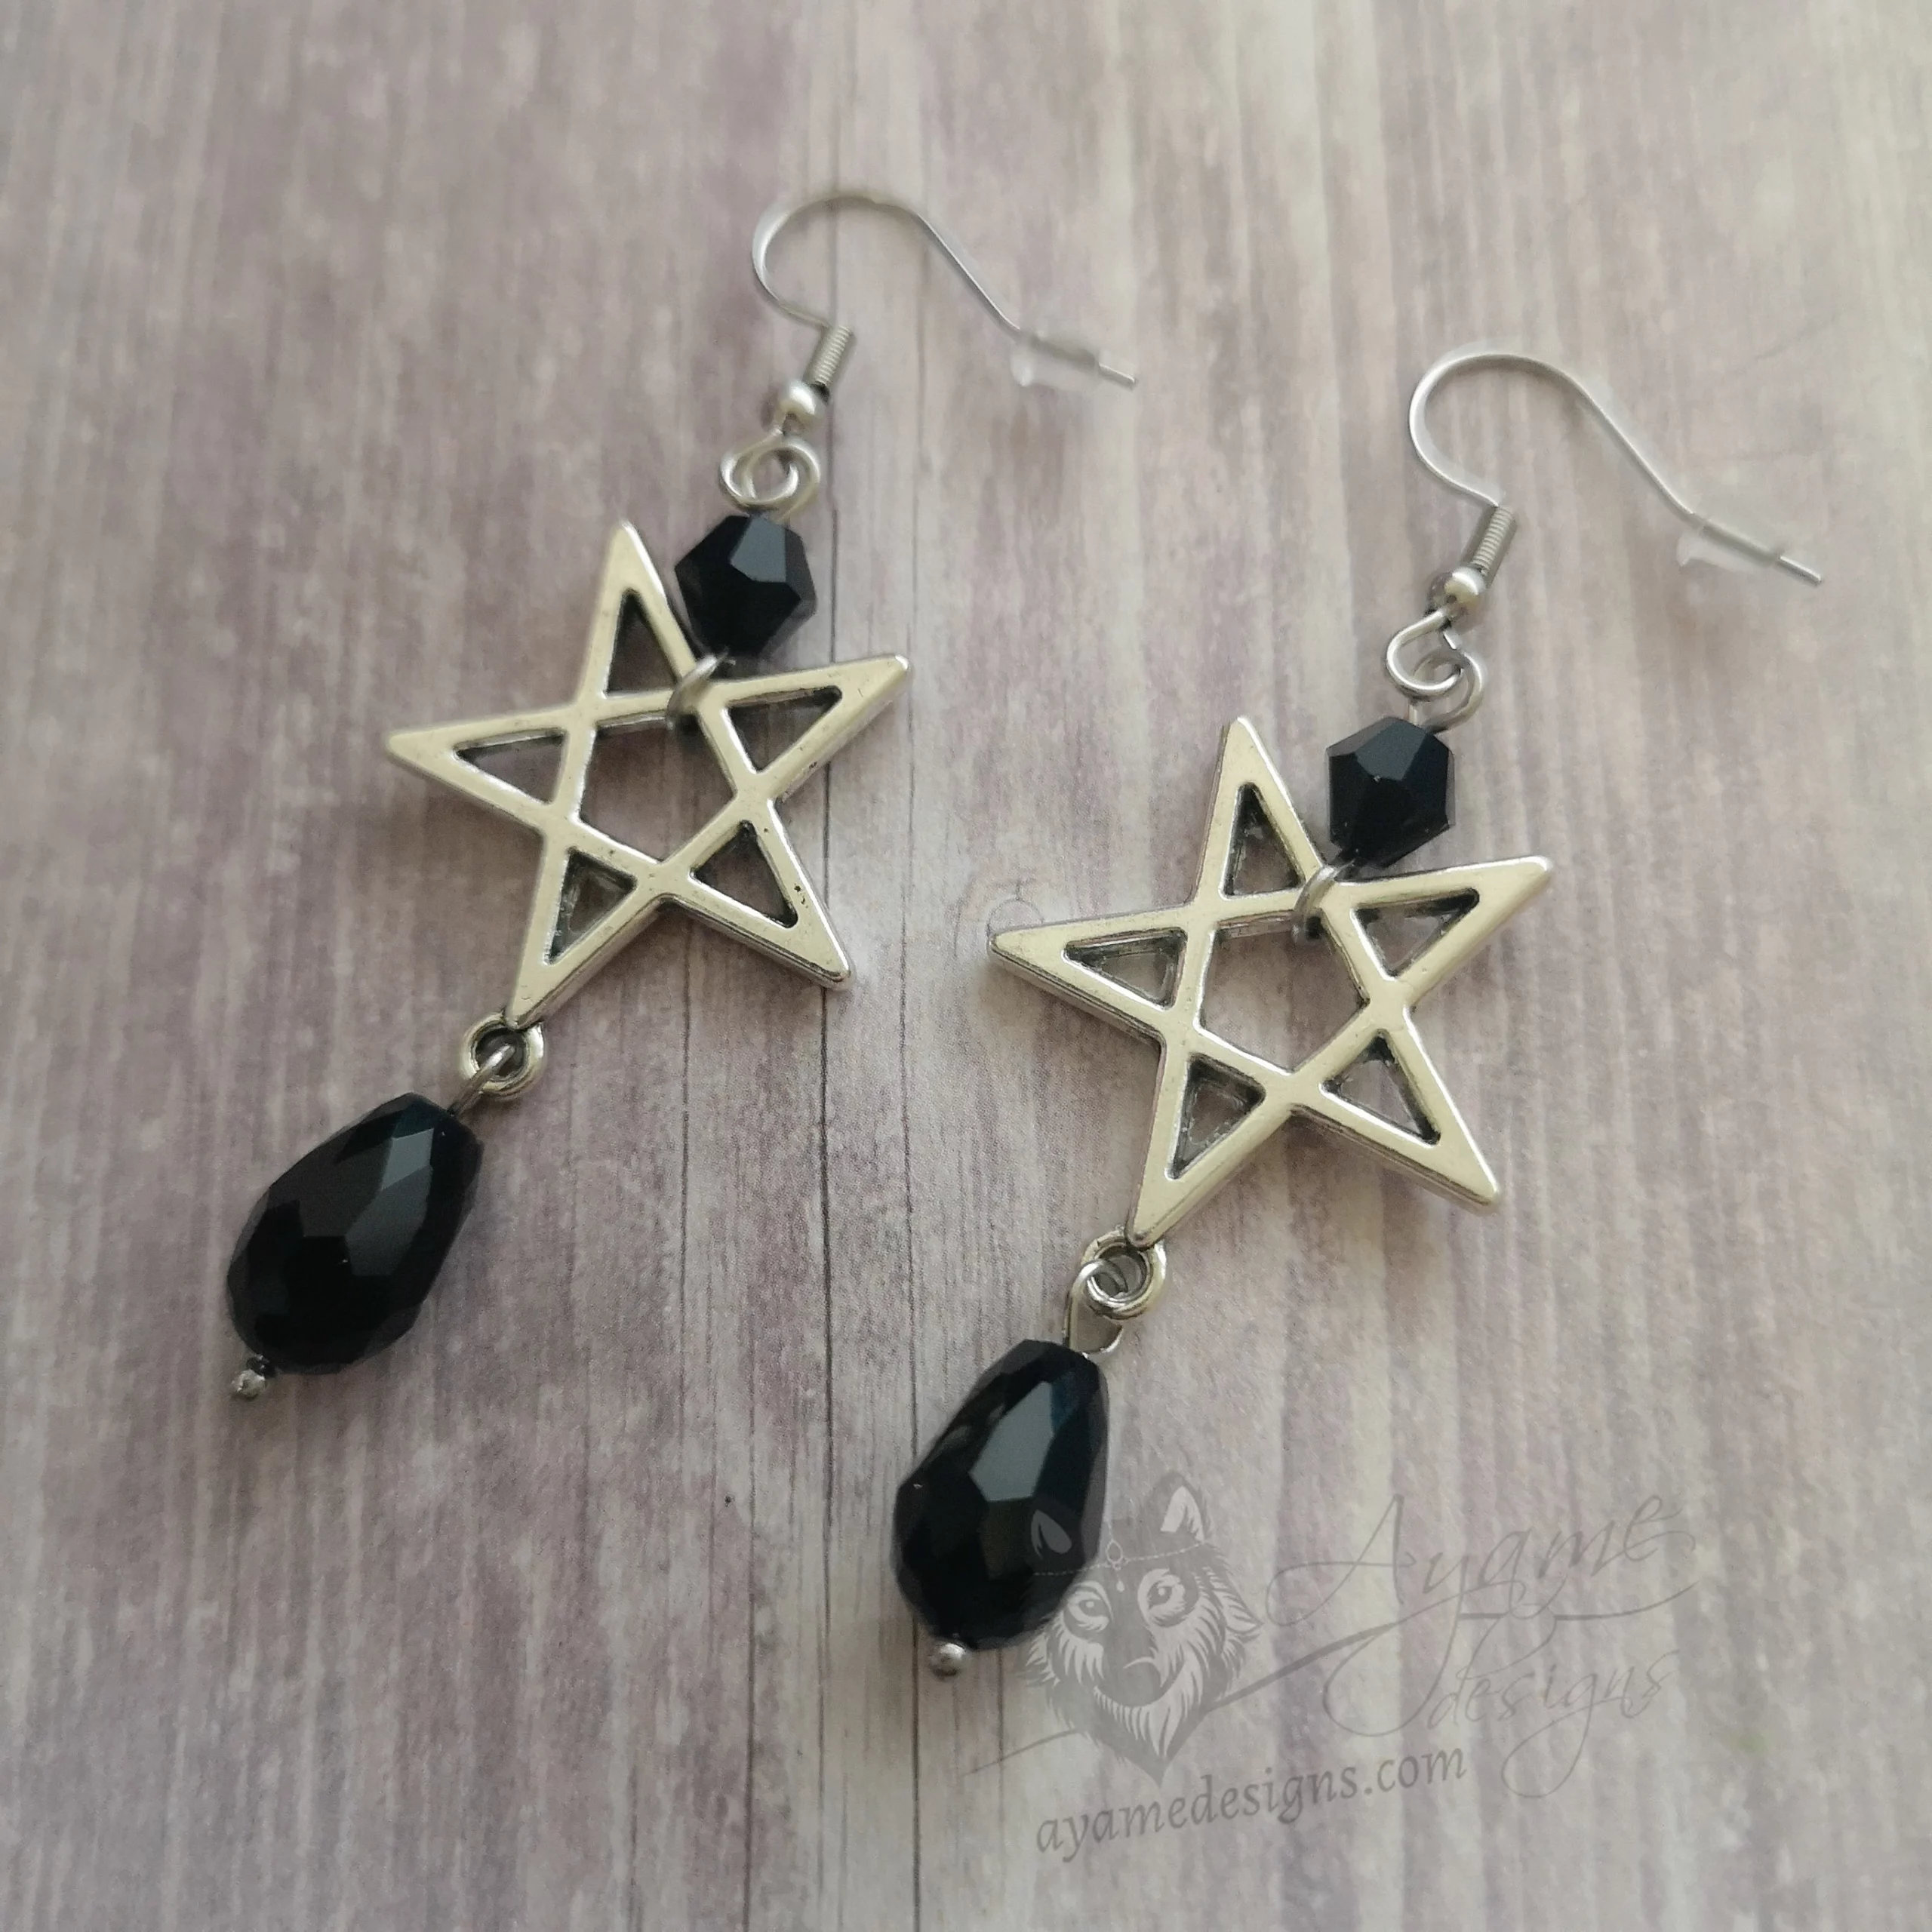 Handmade pentagram earrings with black Austrian crystal beads and stainless steel earring hooks